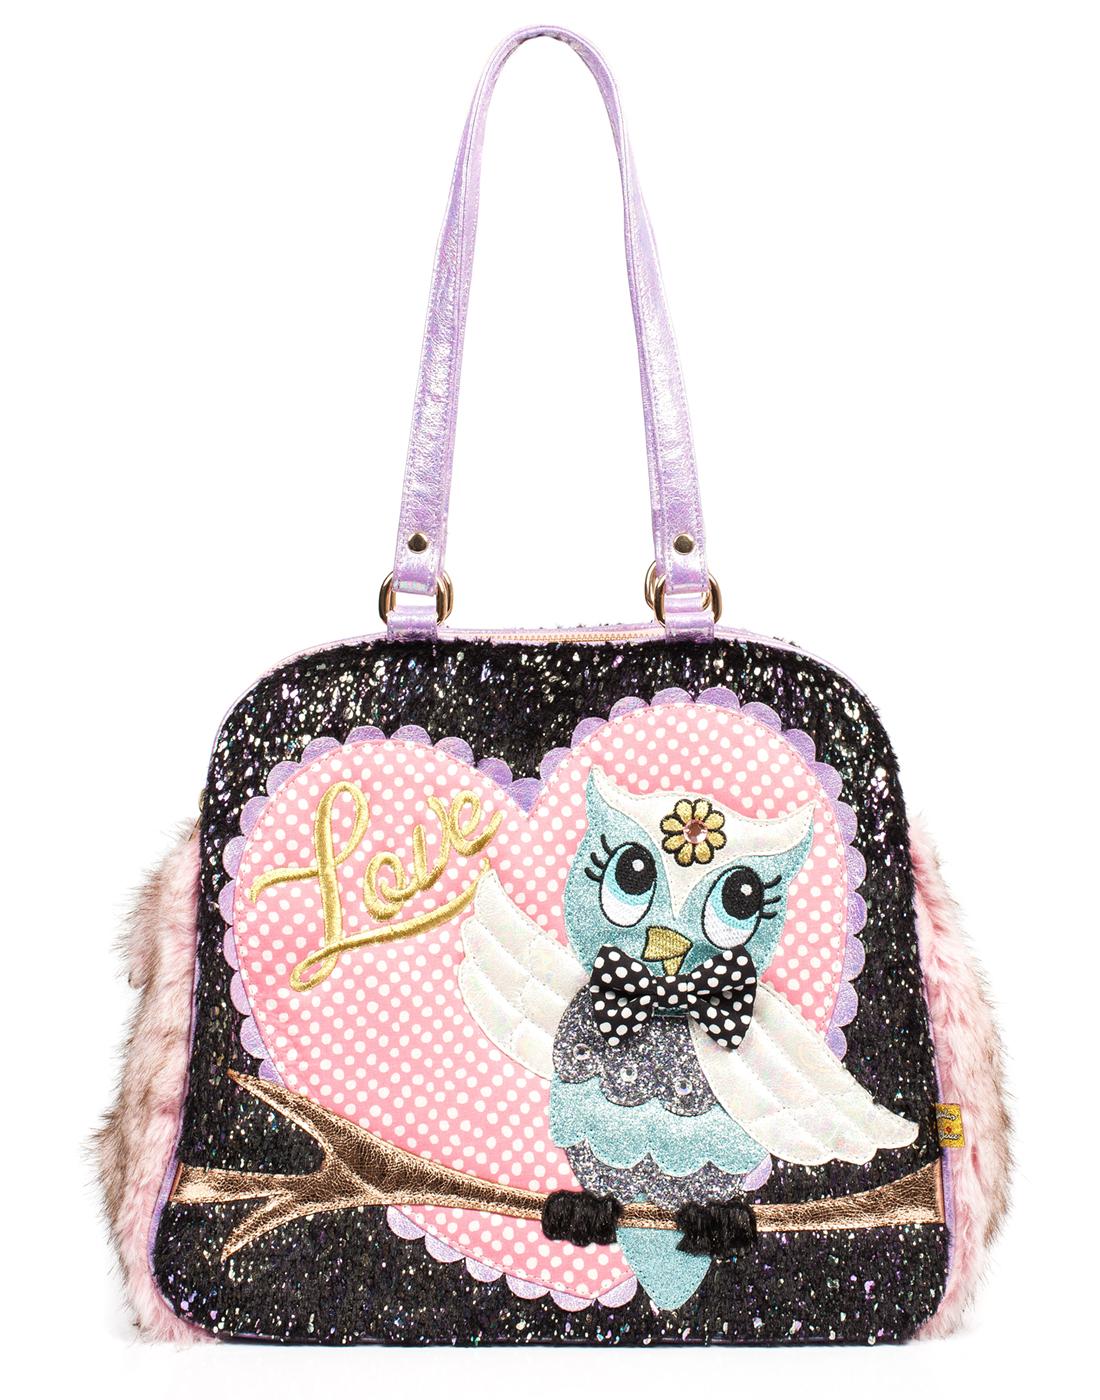 What A Hoot IRREGULAR CHOICE Owl Shoulder Bag P/B